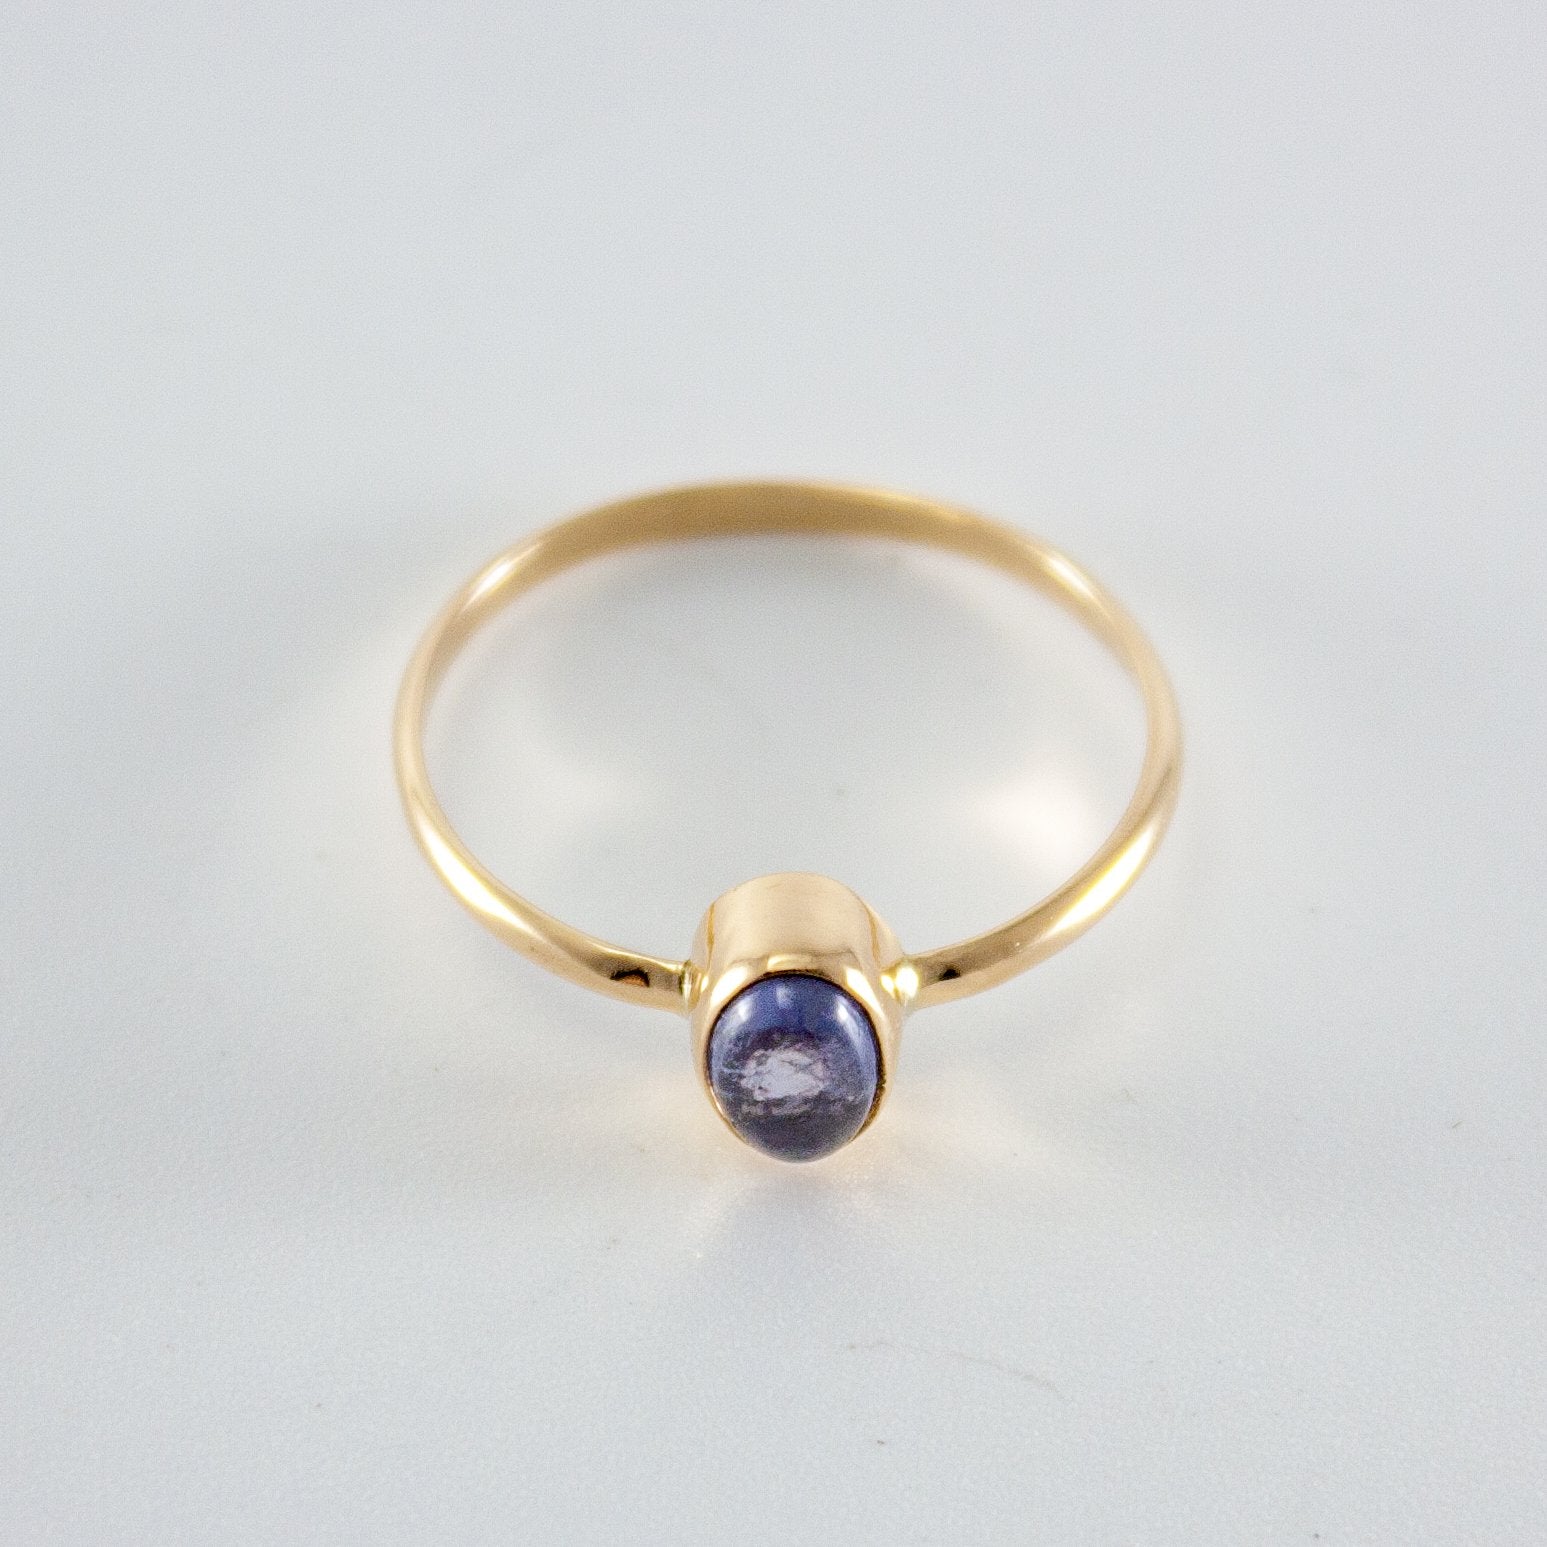 Violet Iolite Step Bezel Gold Ring - 14k Gold Filled, Minimal Design - Jewelry & Watches - Bijou Her -  -  - 